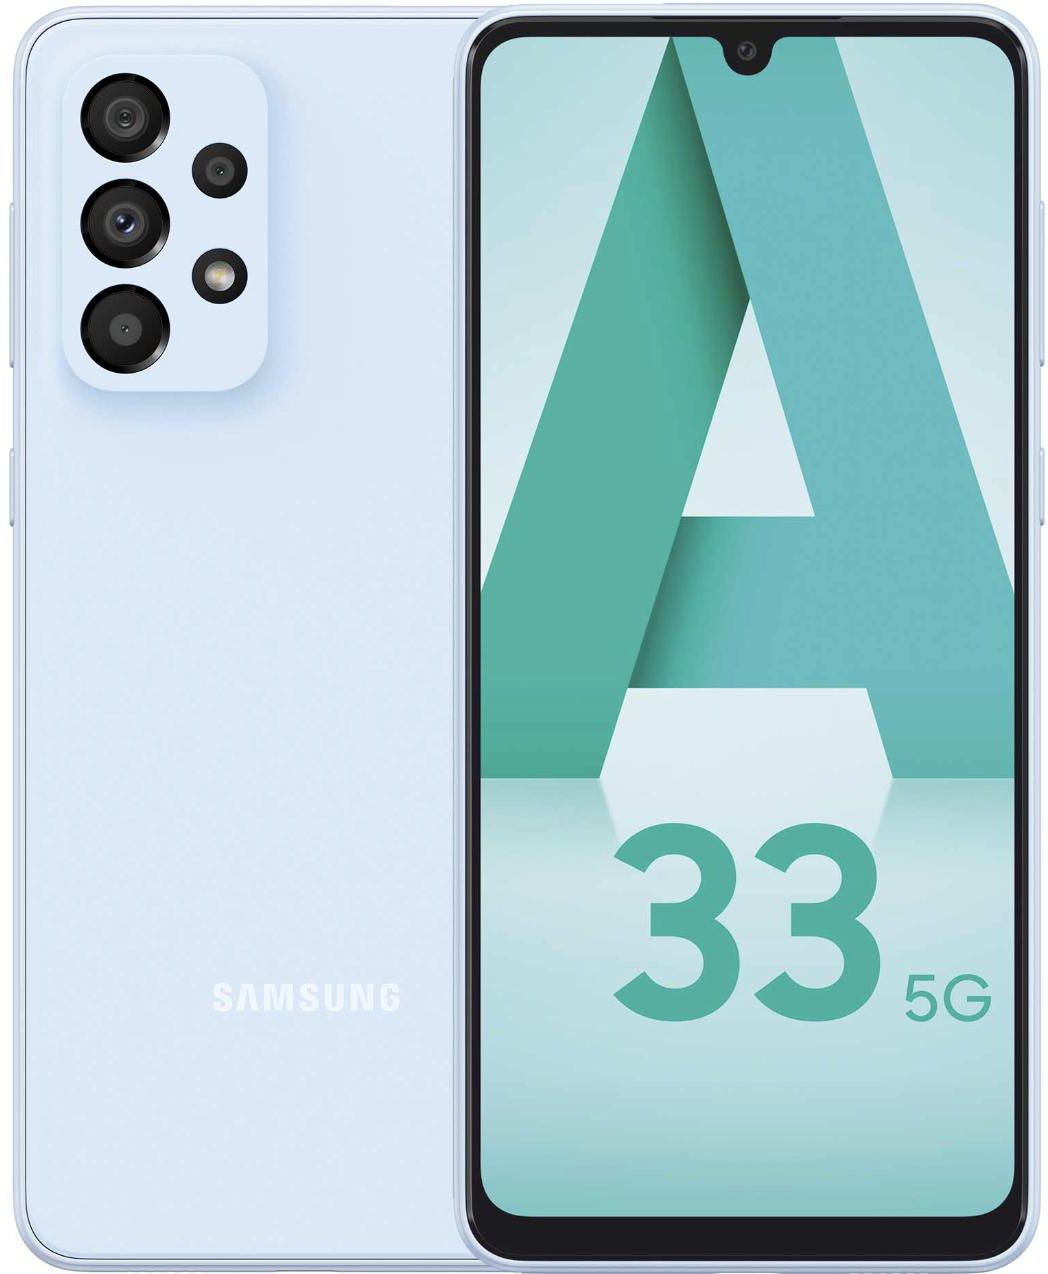 Samsung Galaxy A33 5G 6GB RAM 128GB ROM 6.4" Super AMOLED Display 48MP Quad Camera Android 12 One UI 4.1 Fast charging 25W 5000mAh Battery 24 Months EA Warranty